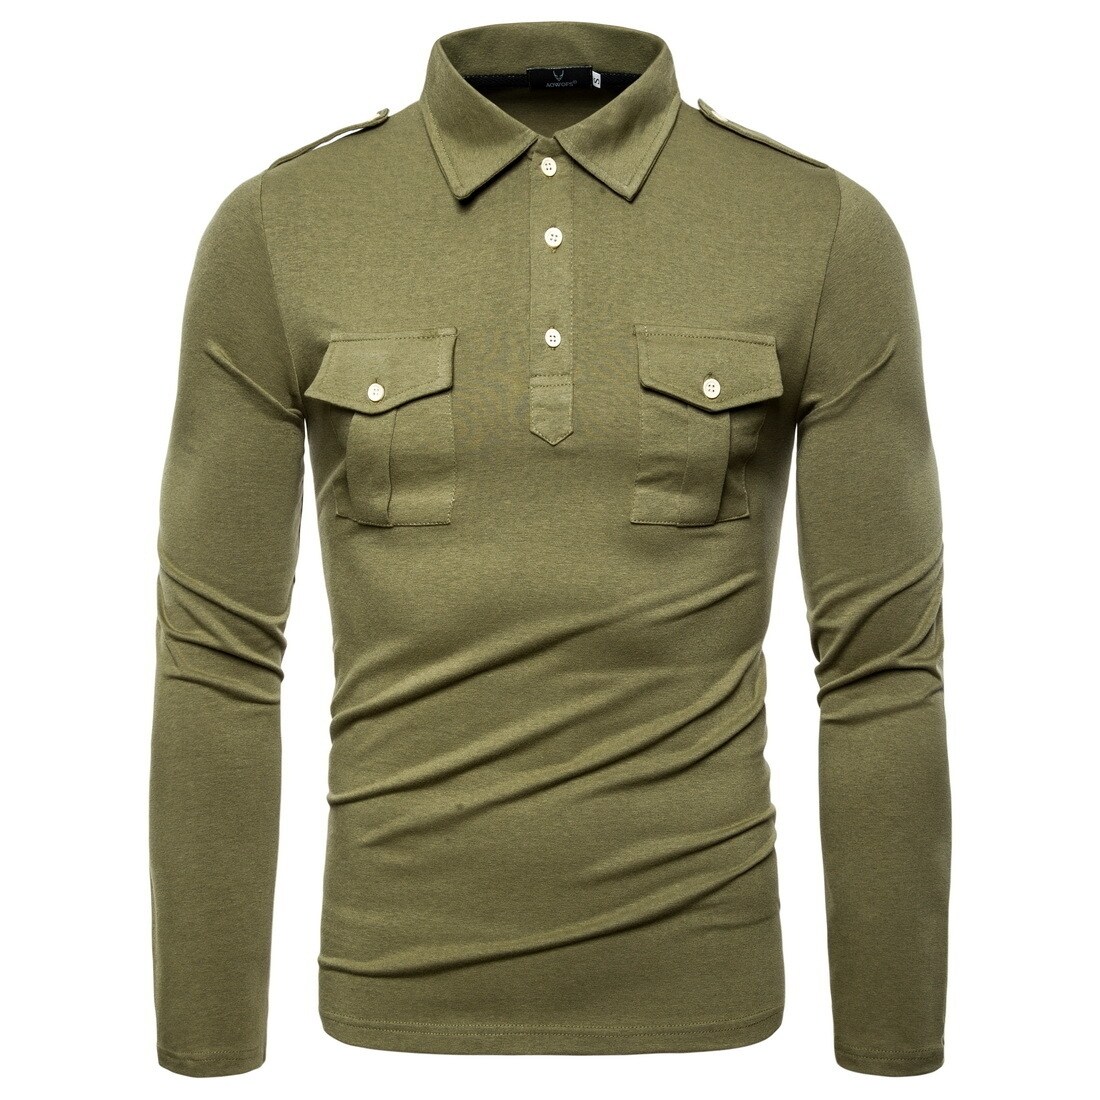 polo shirts long sleeve with pocket